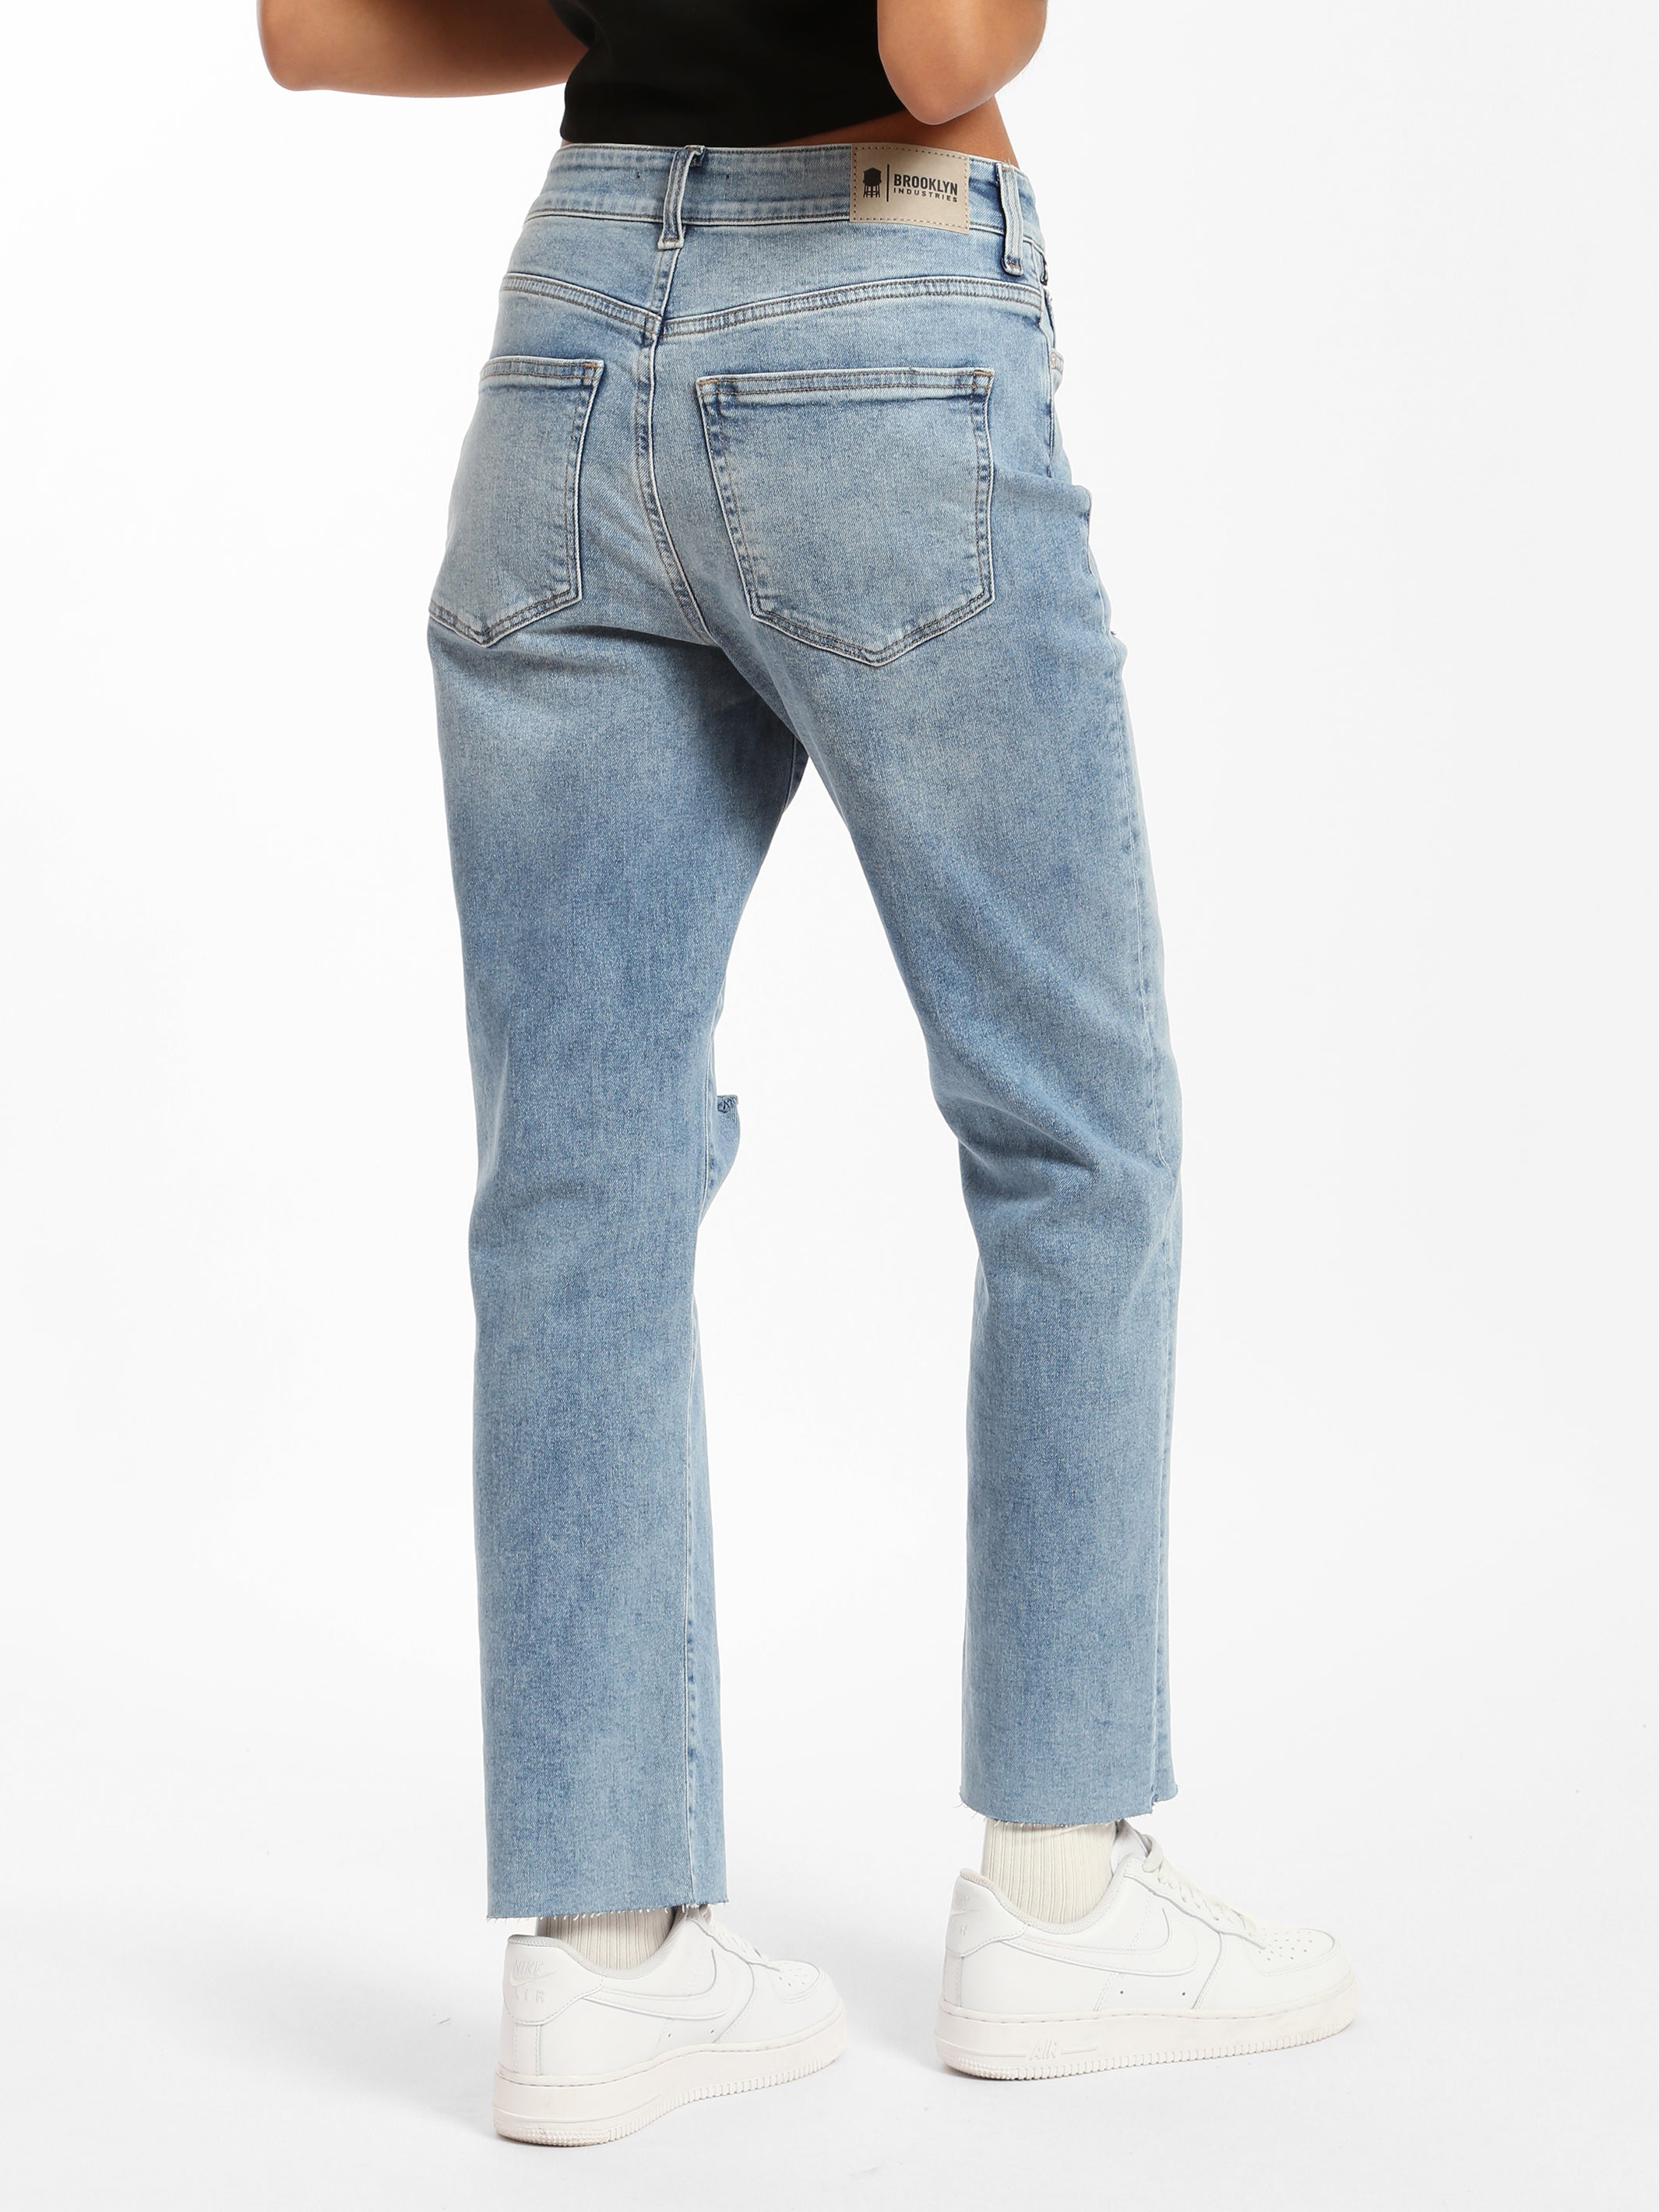 Meadow High Rise Boyfriend Jeans in Mid Ripped Denim - BROOKLYN INDUSTRIES